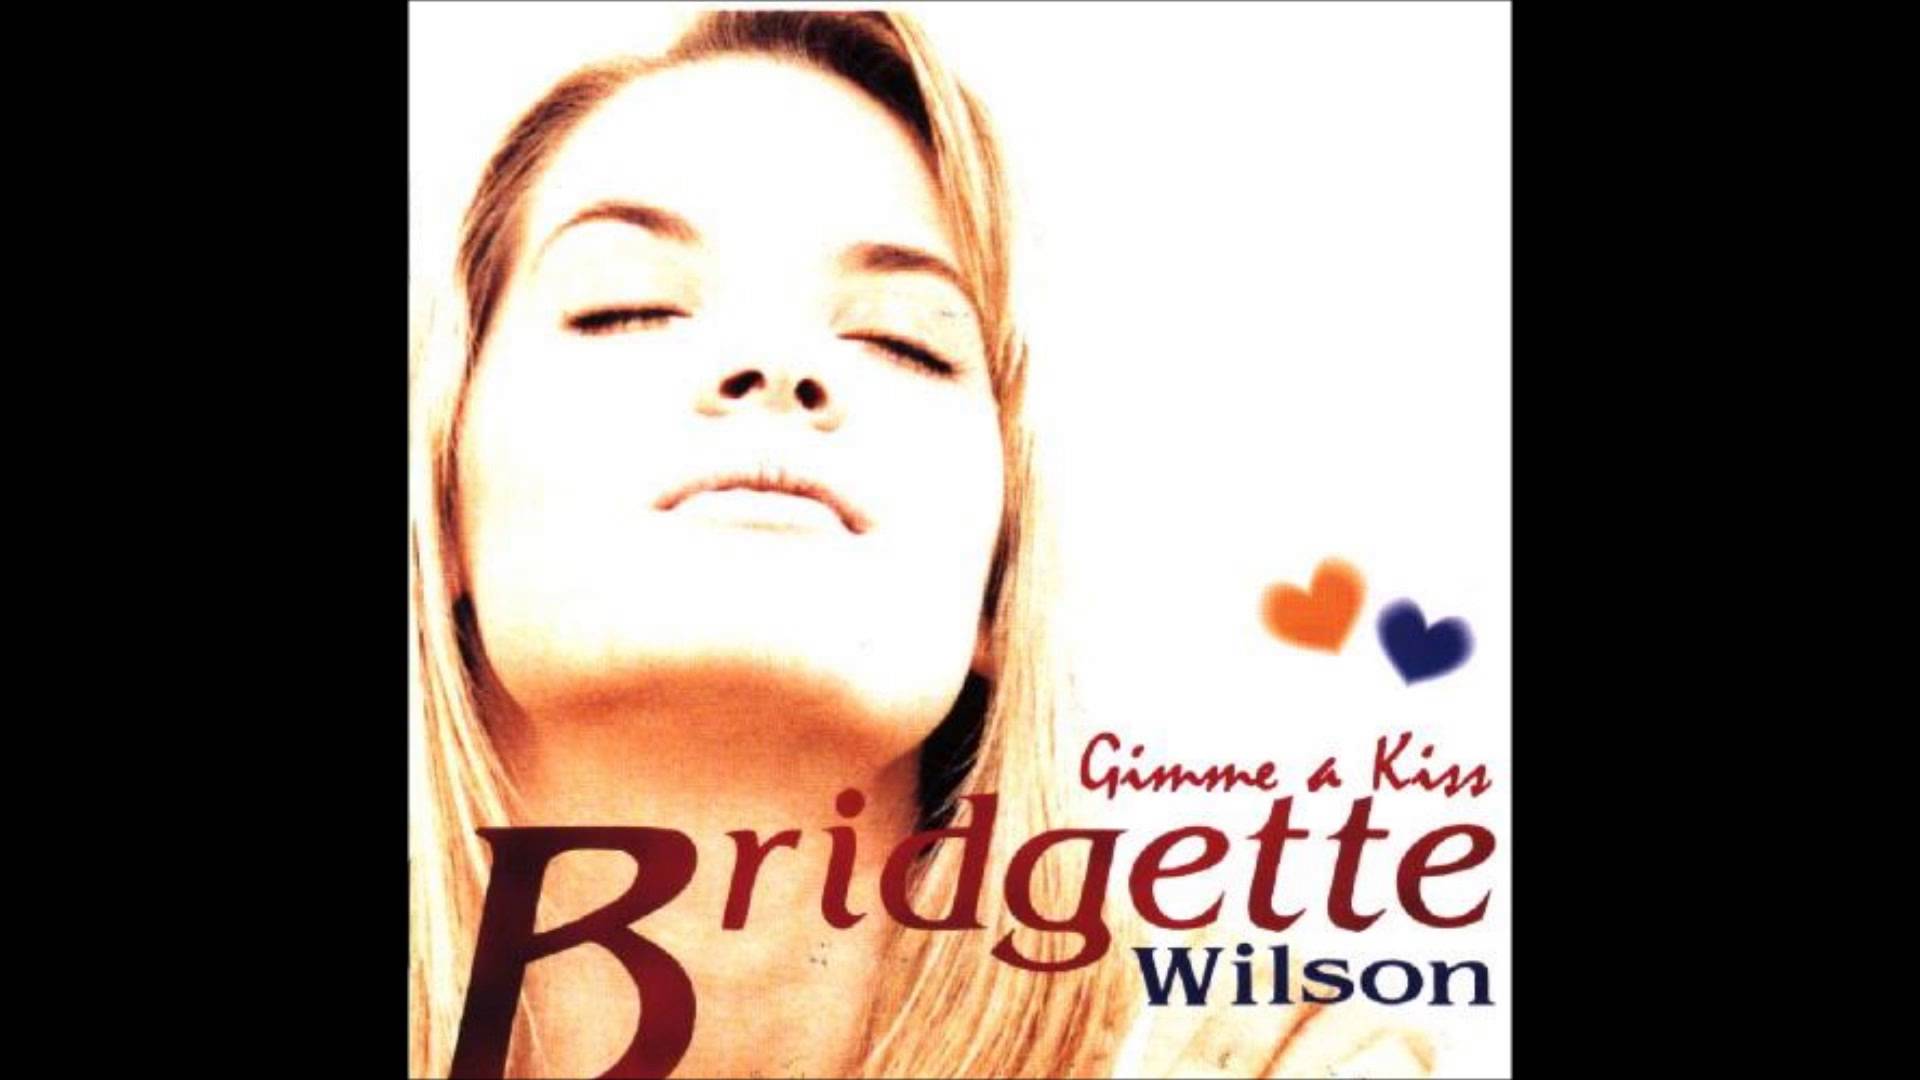 Bridgette Wilson Gimme a kiss - YouTube